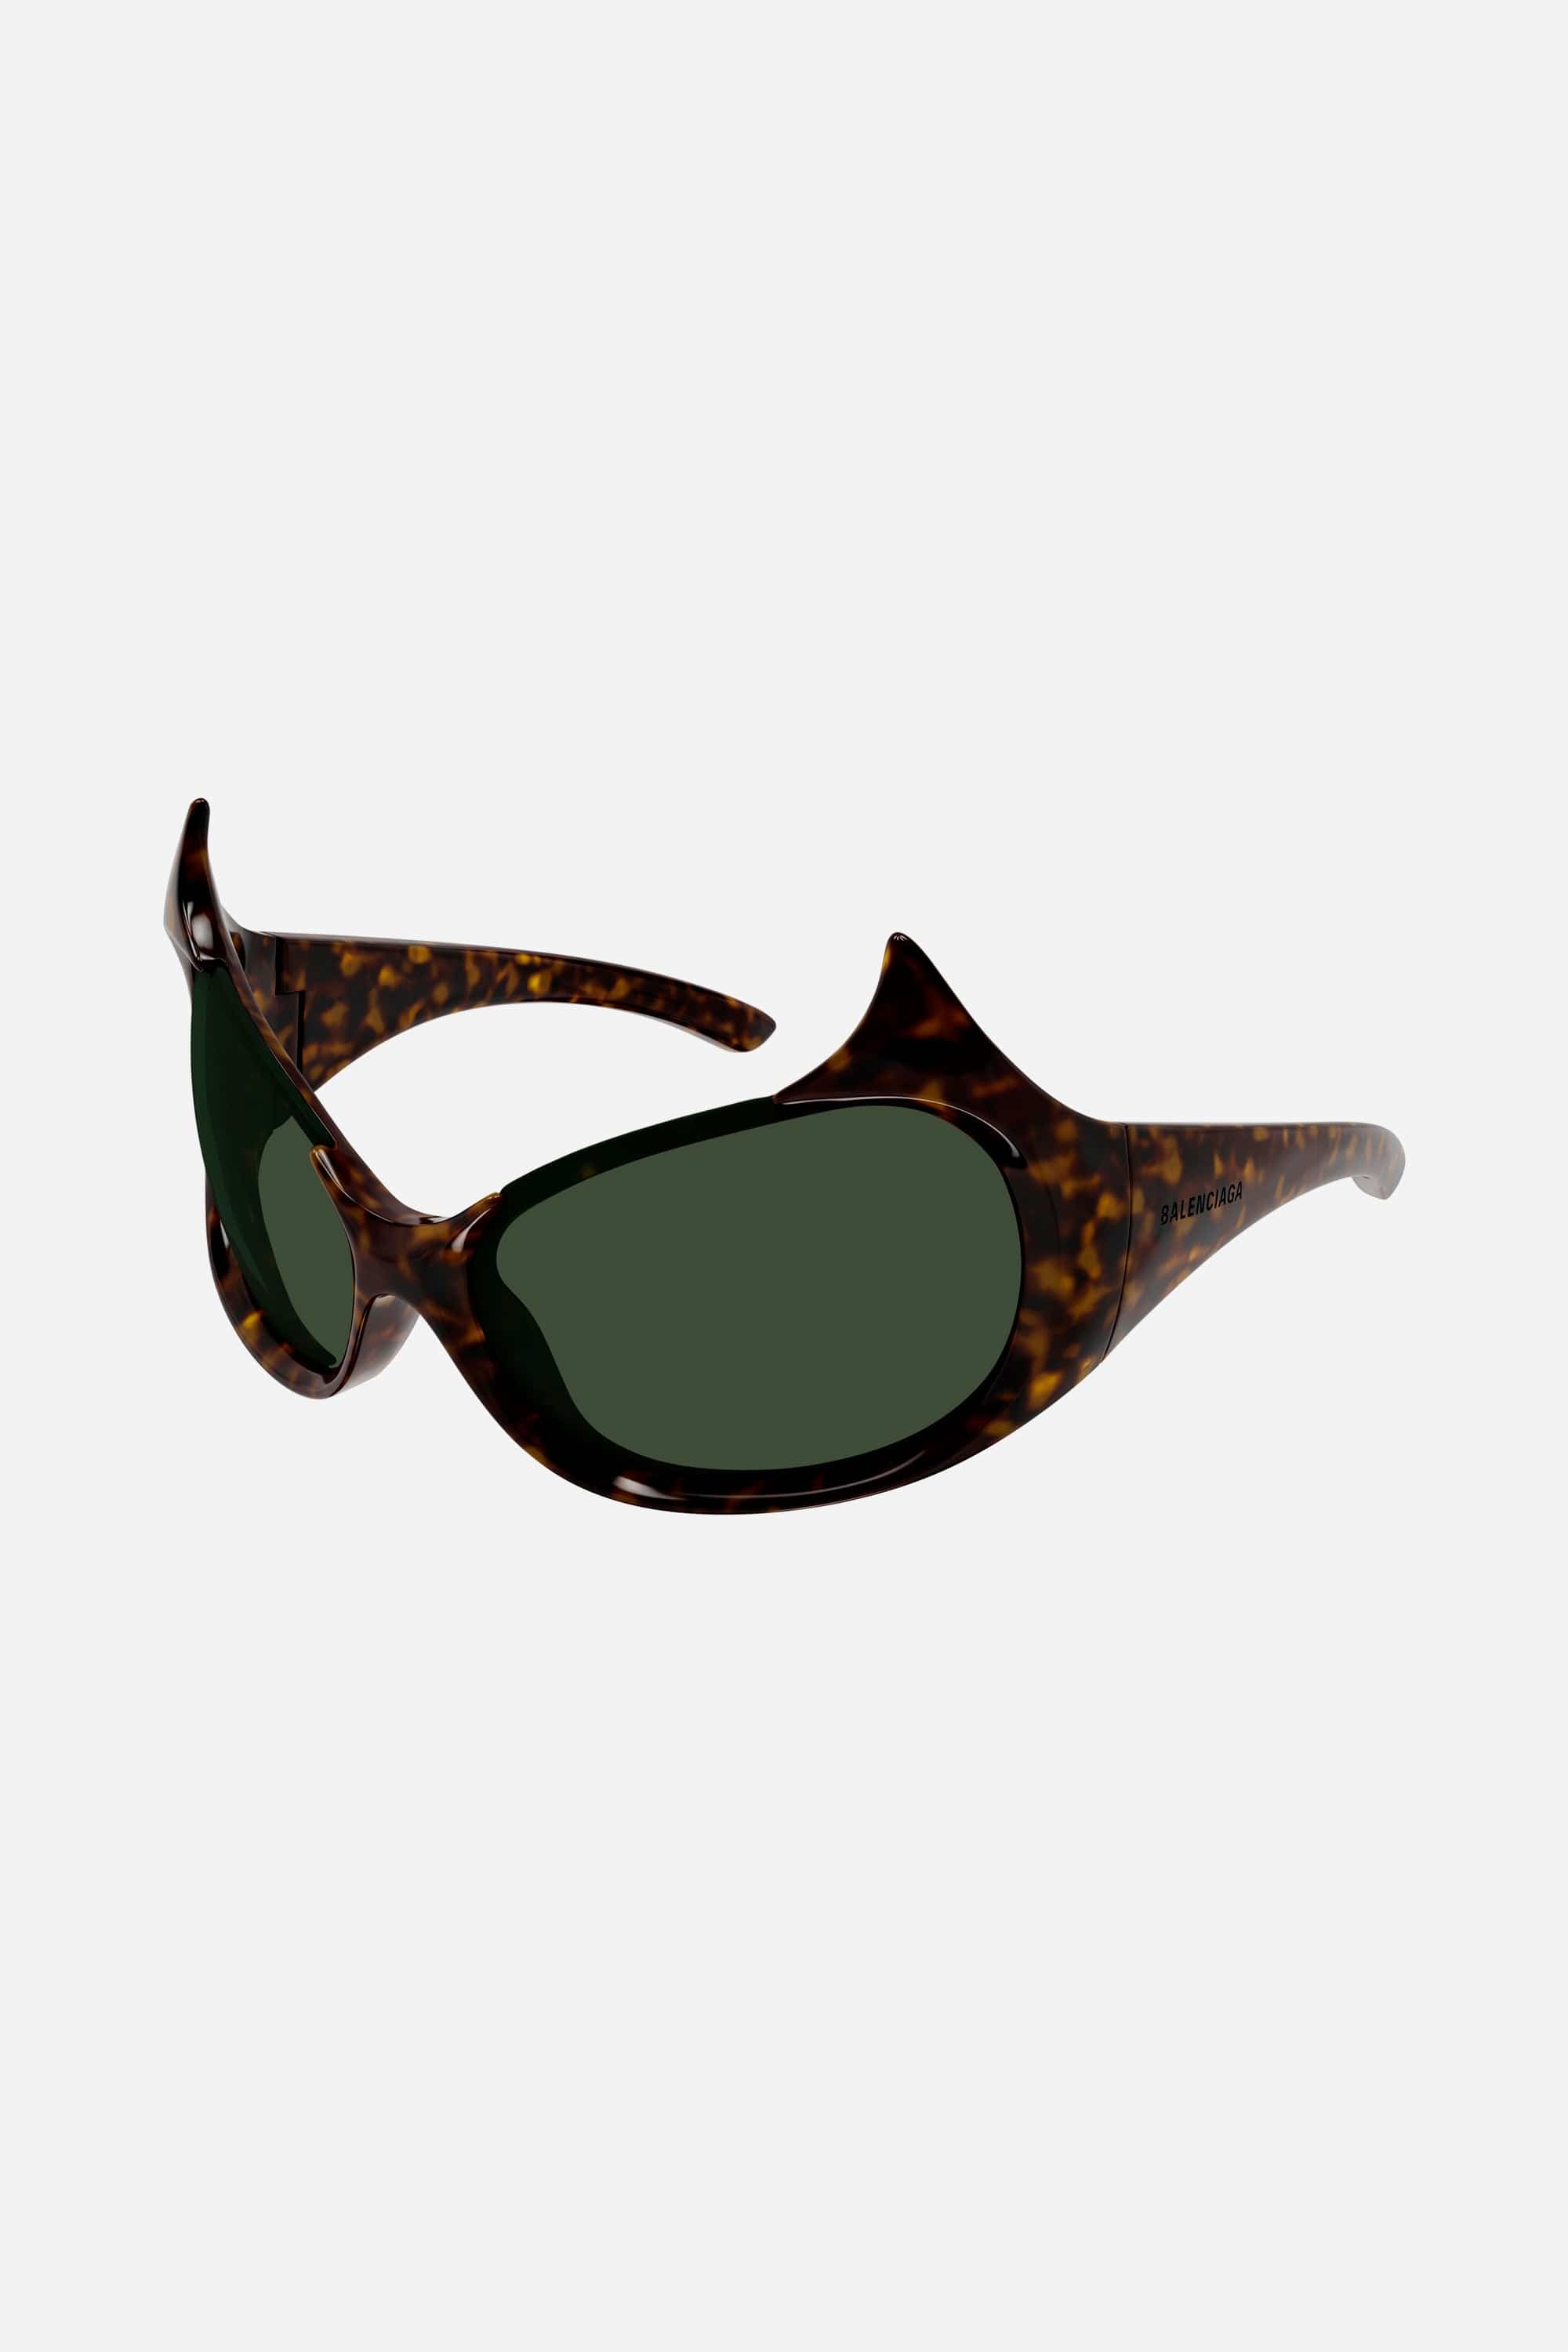 Balenciaga GOTHAM cat sunglasses in havana - Eyewear Club